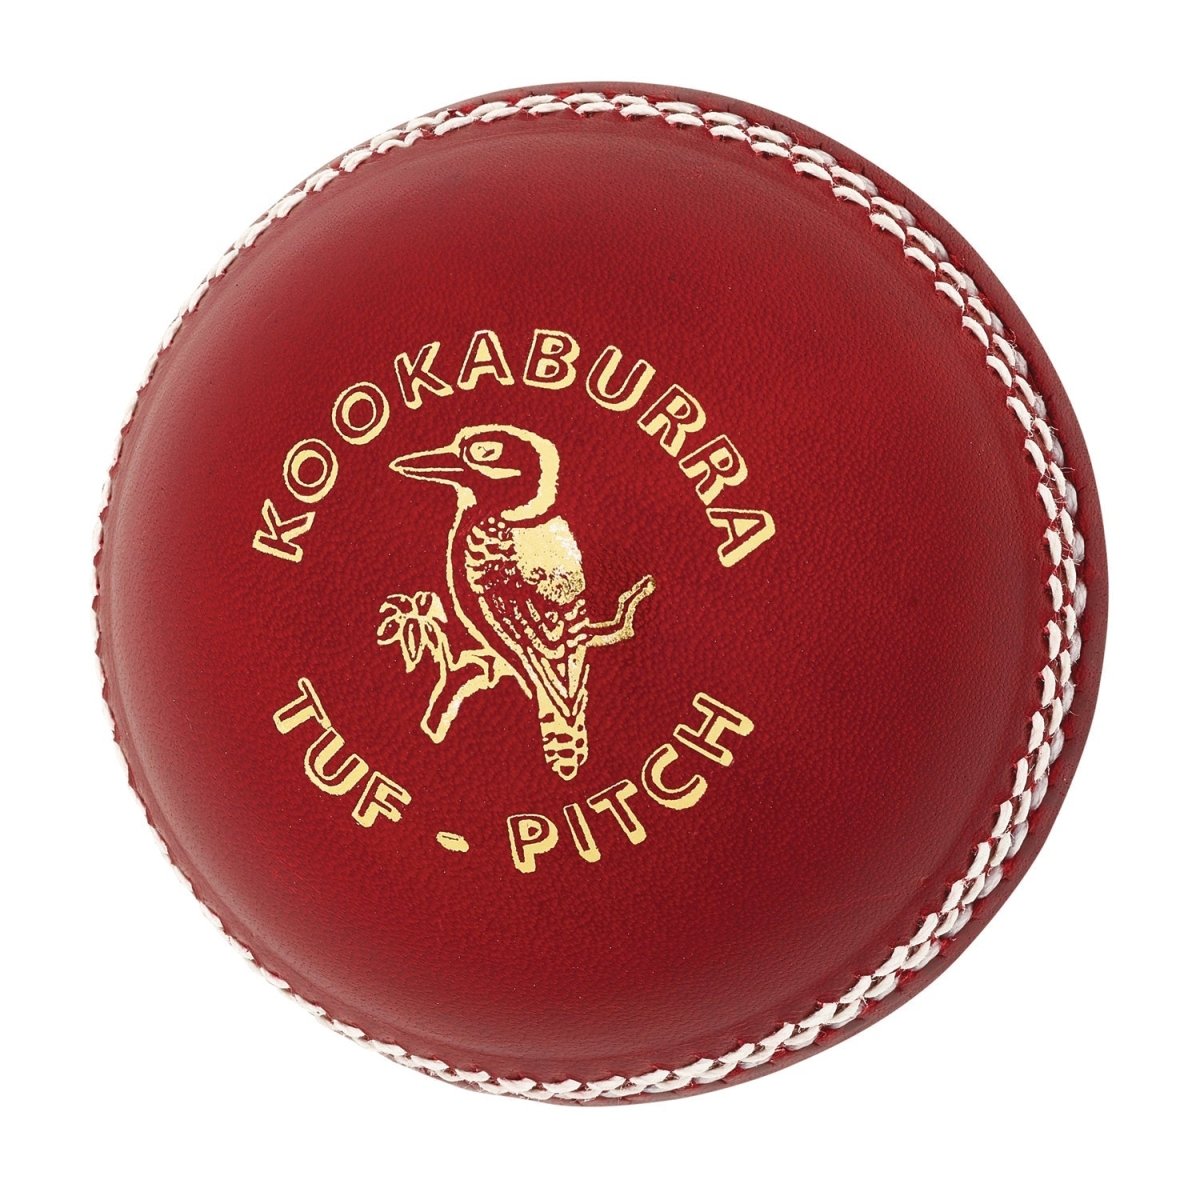 Kookaburra Tuf Pitch Cricket Ball - Acrux Sports